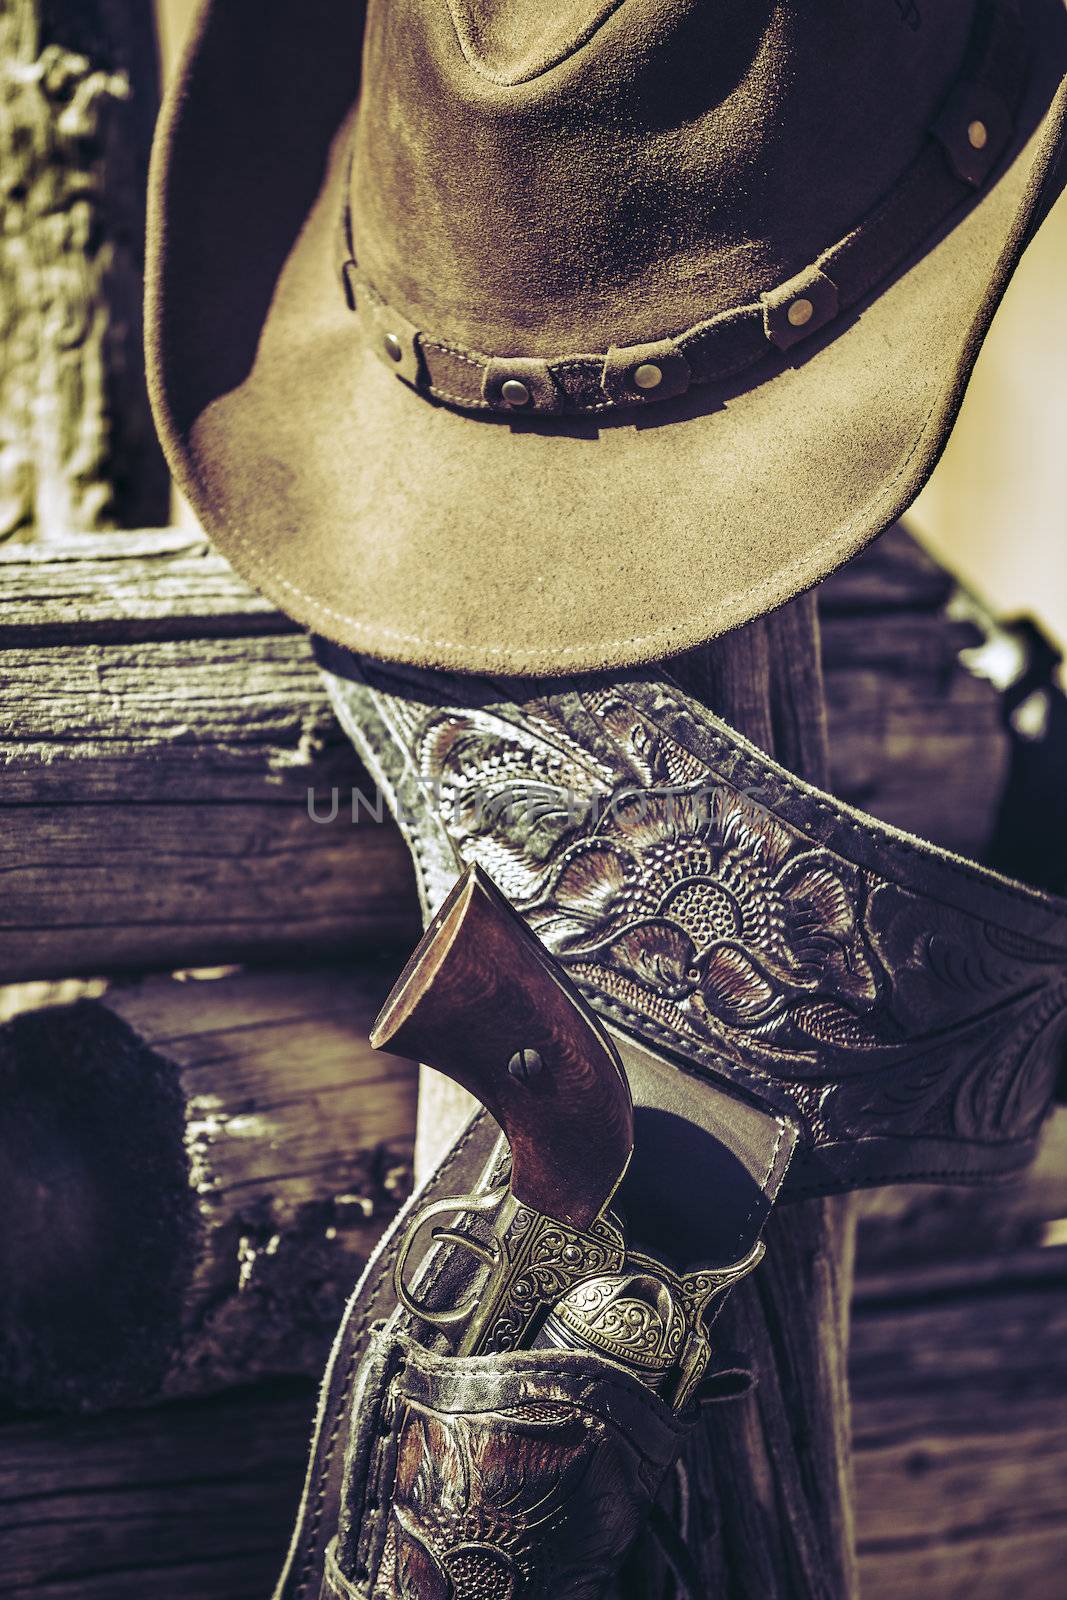 cowboy gun and hat outdoor by vwalakte